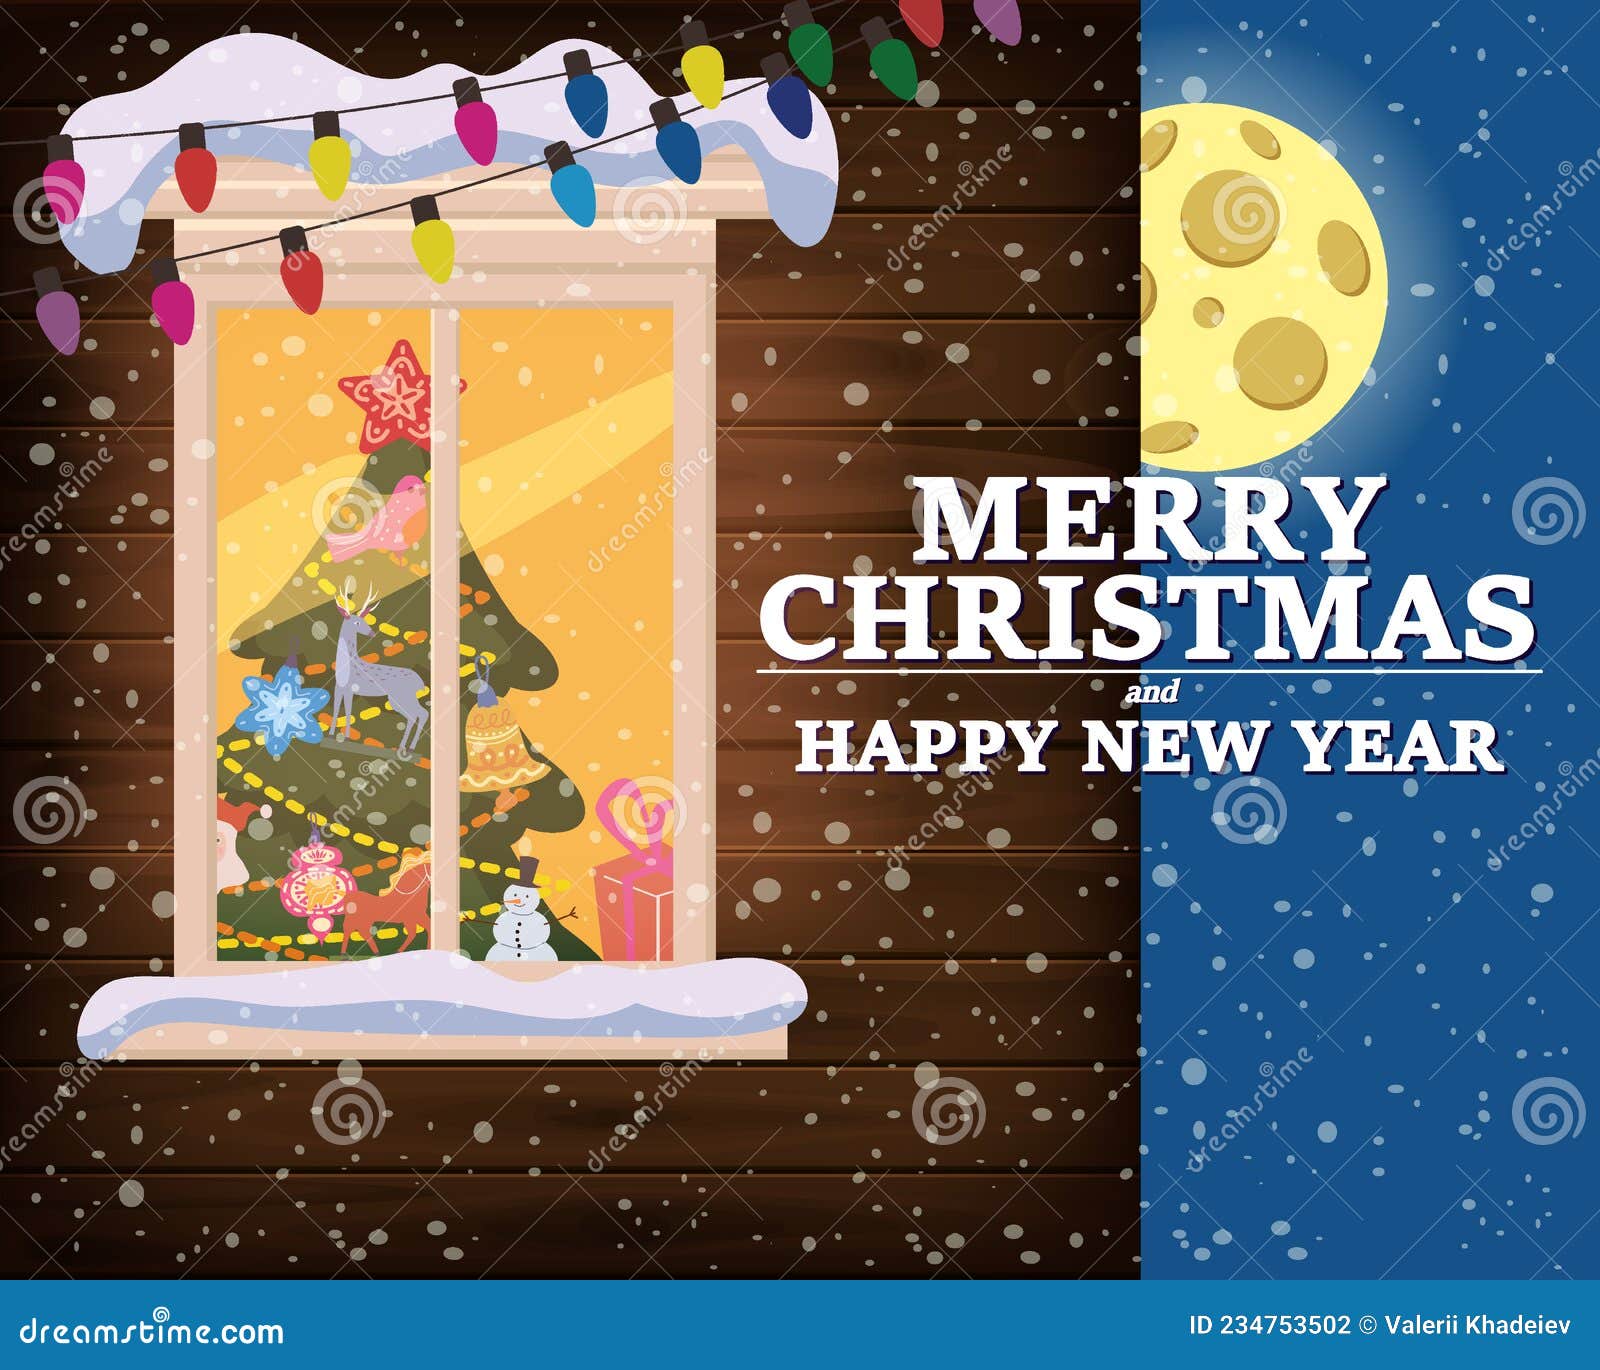 merry chrismas, window, night moon, decoraions garland retro, living room christmas tree. xmas and new year holiday